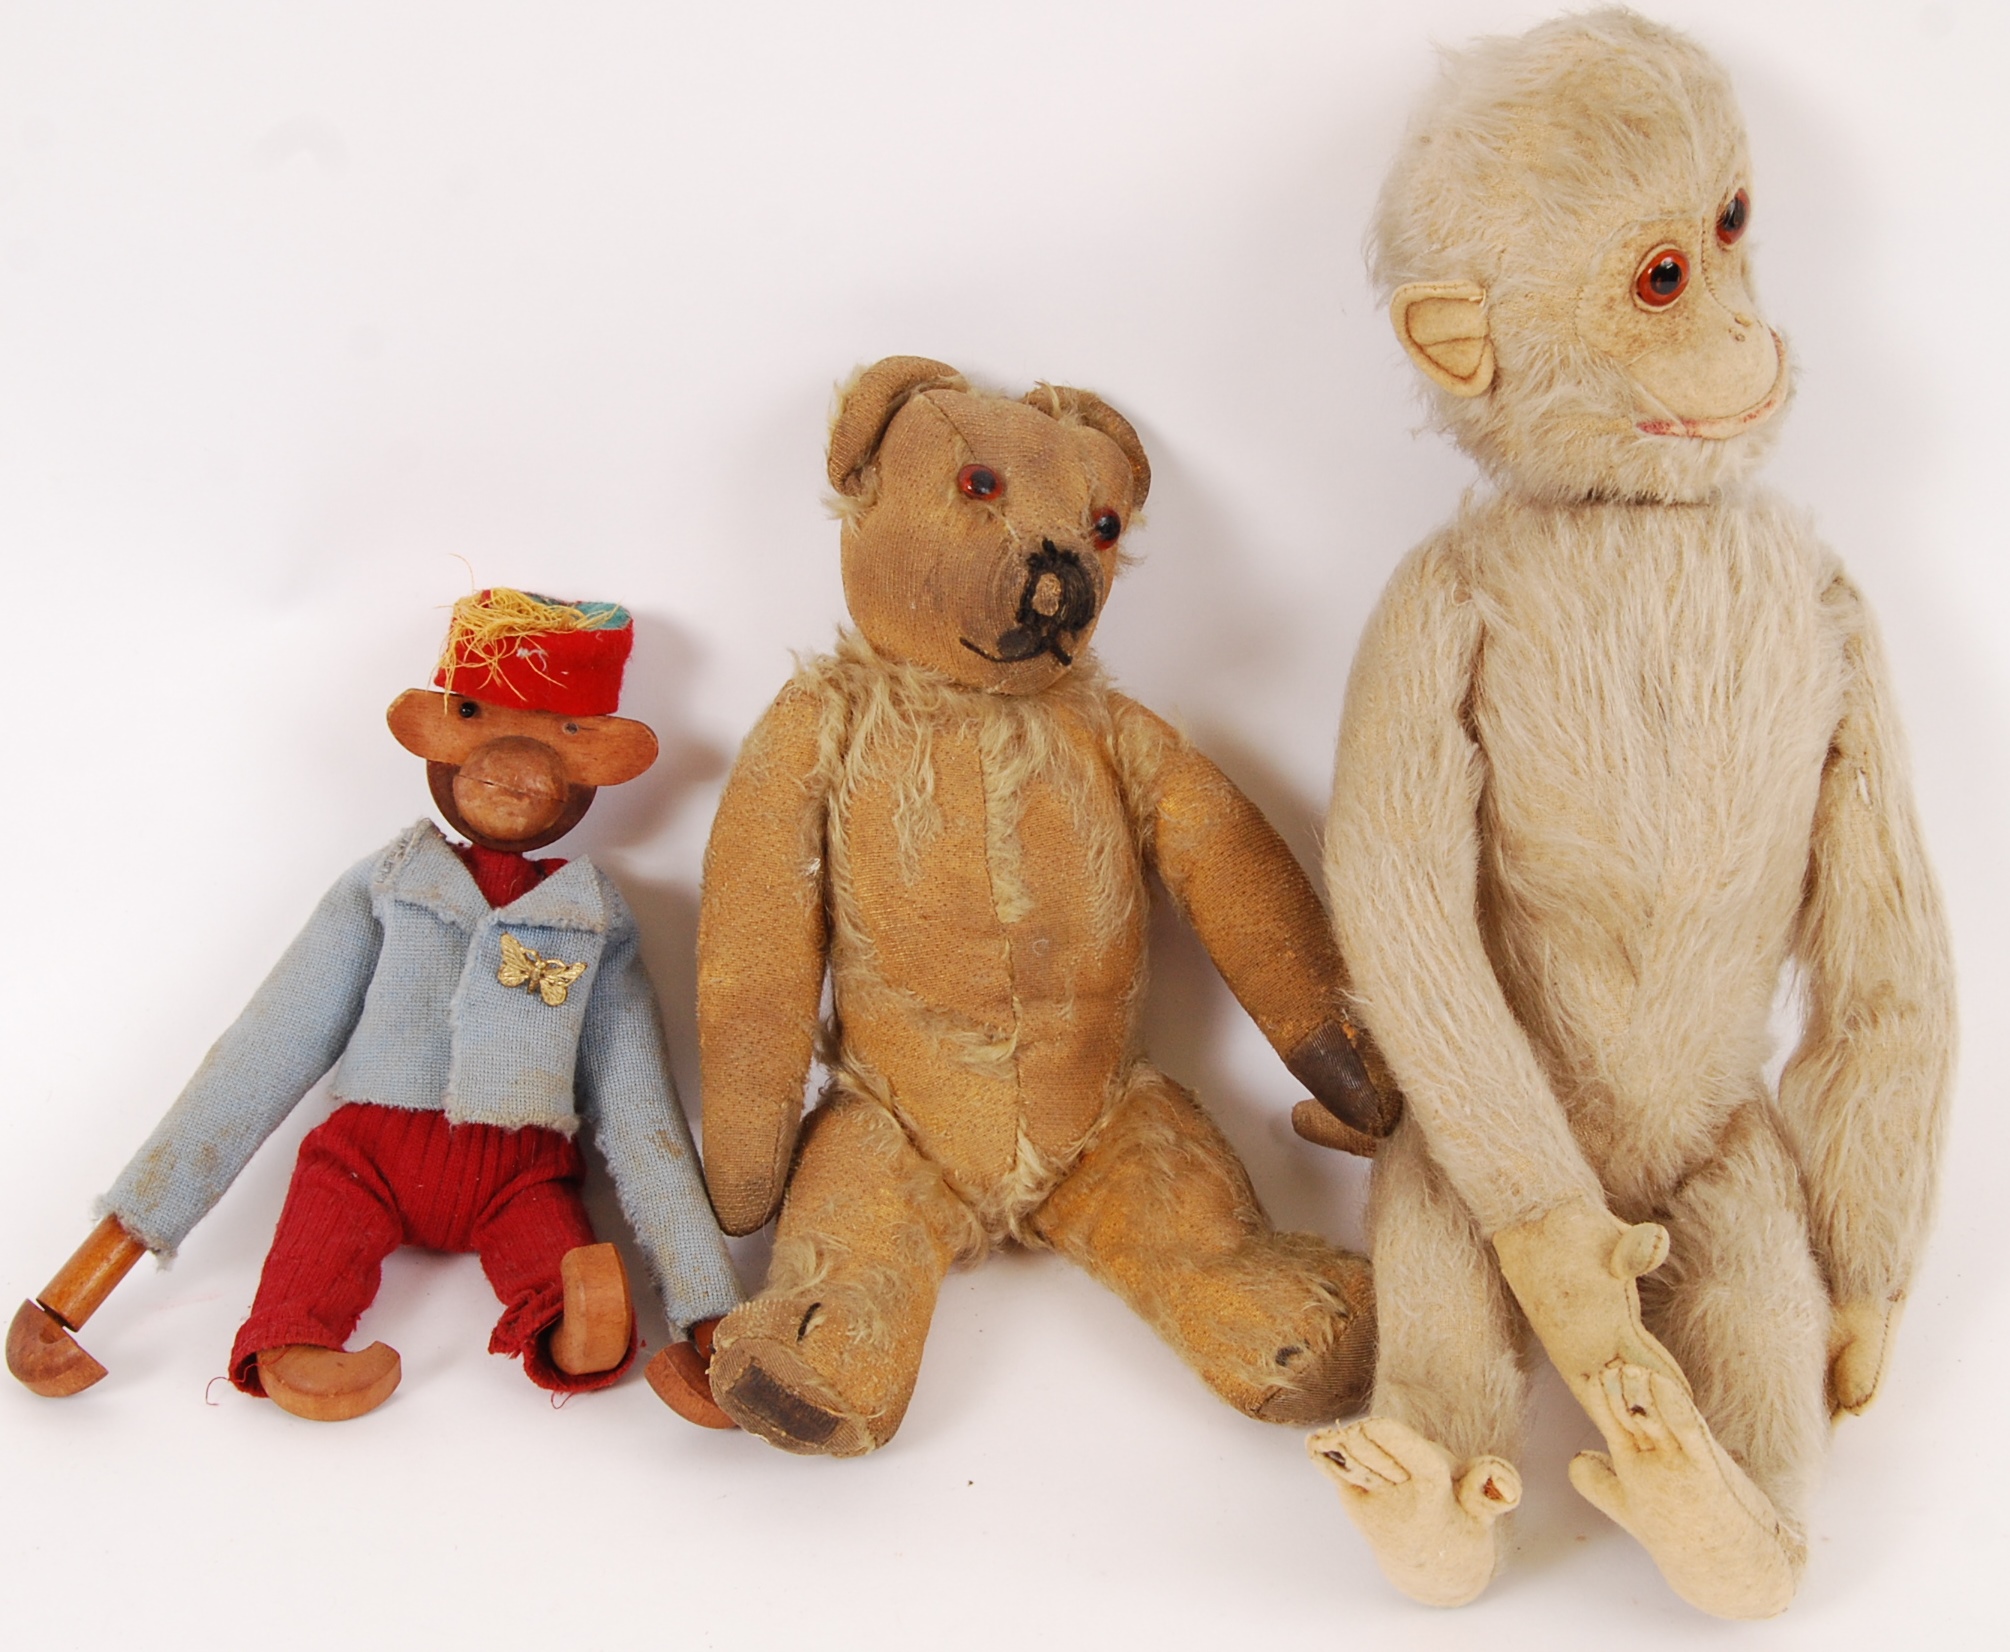 TEDDY BEARS: A 1950's stuffed toy teddy